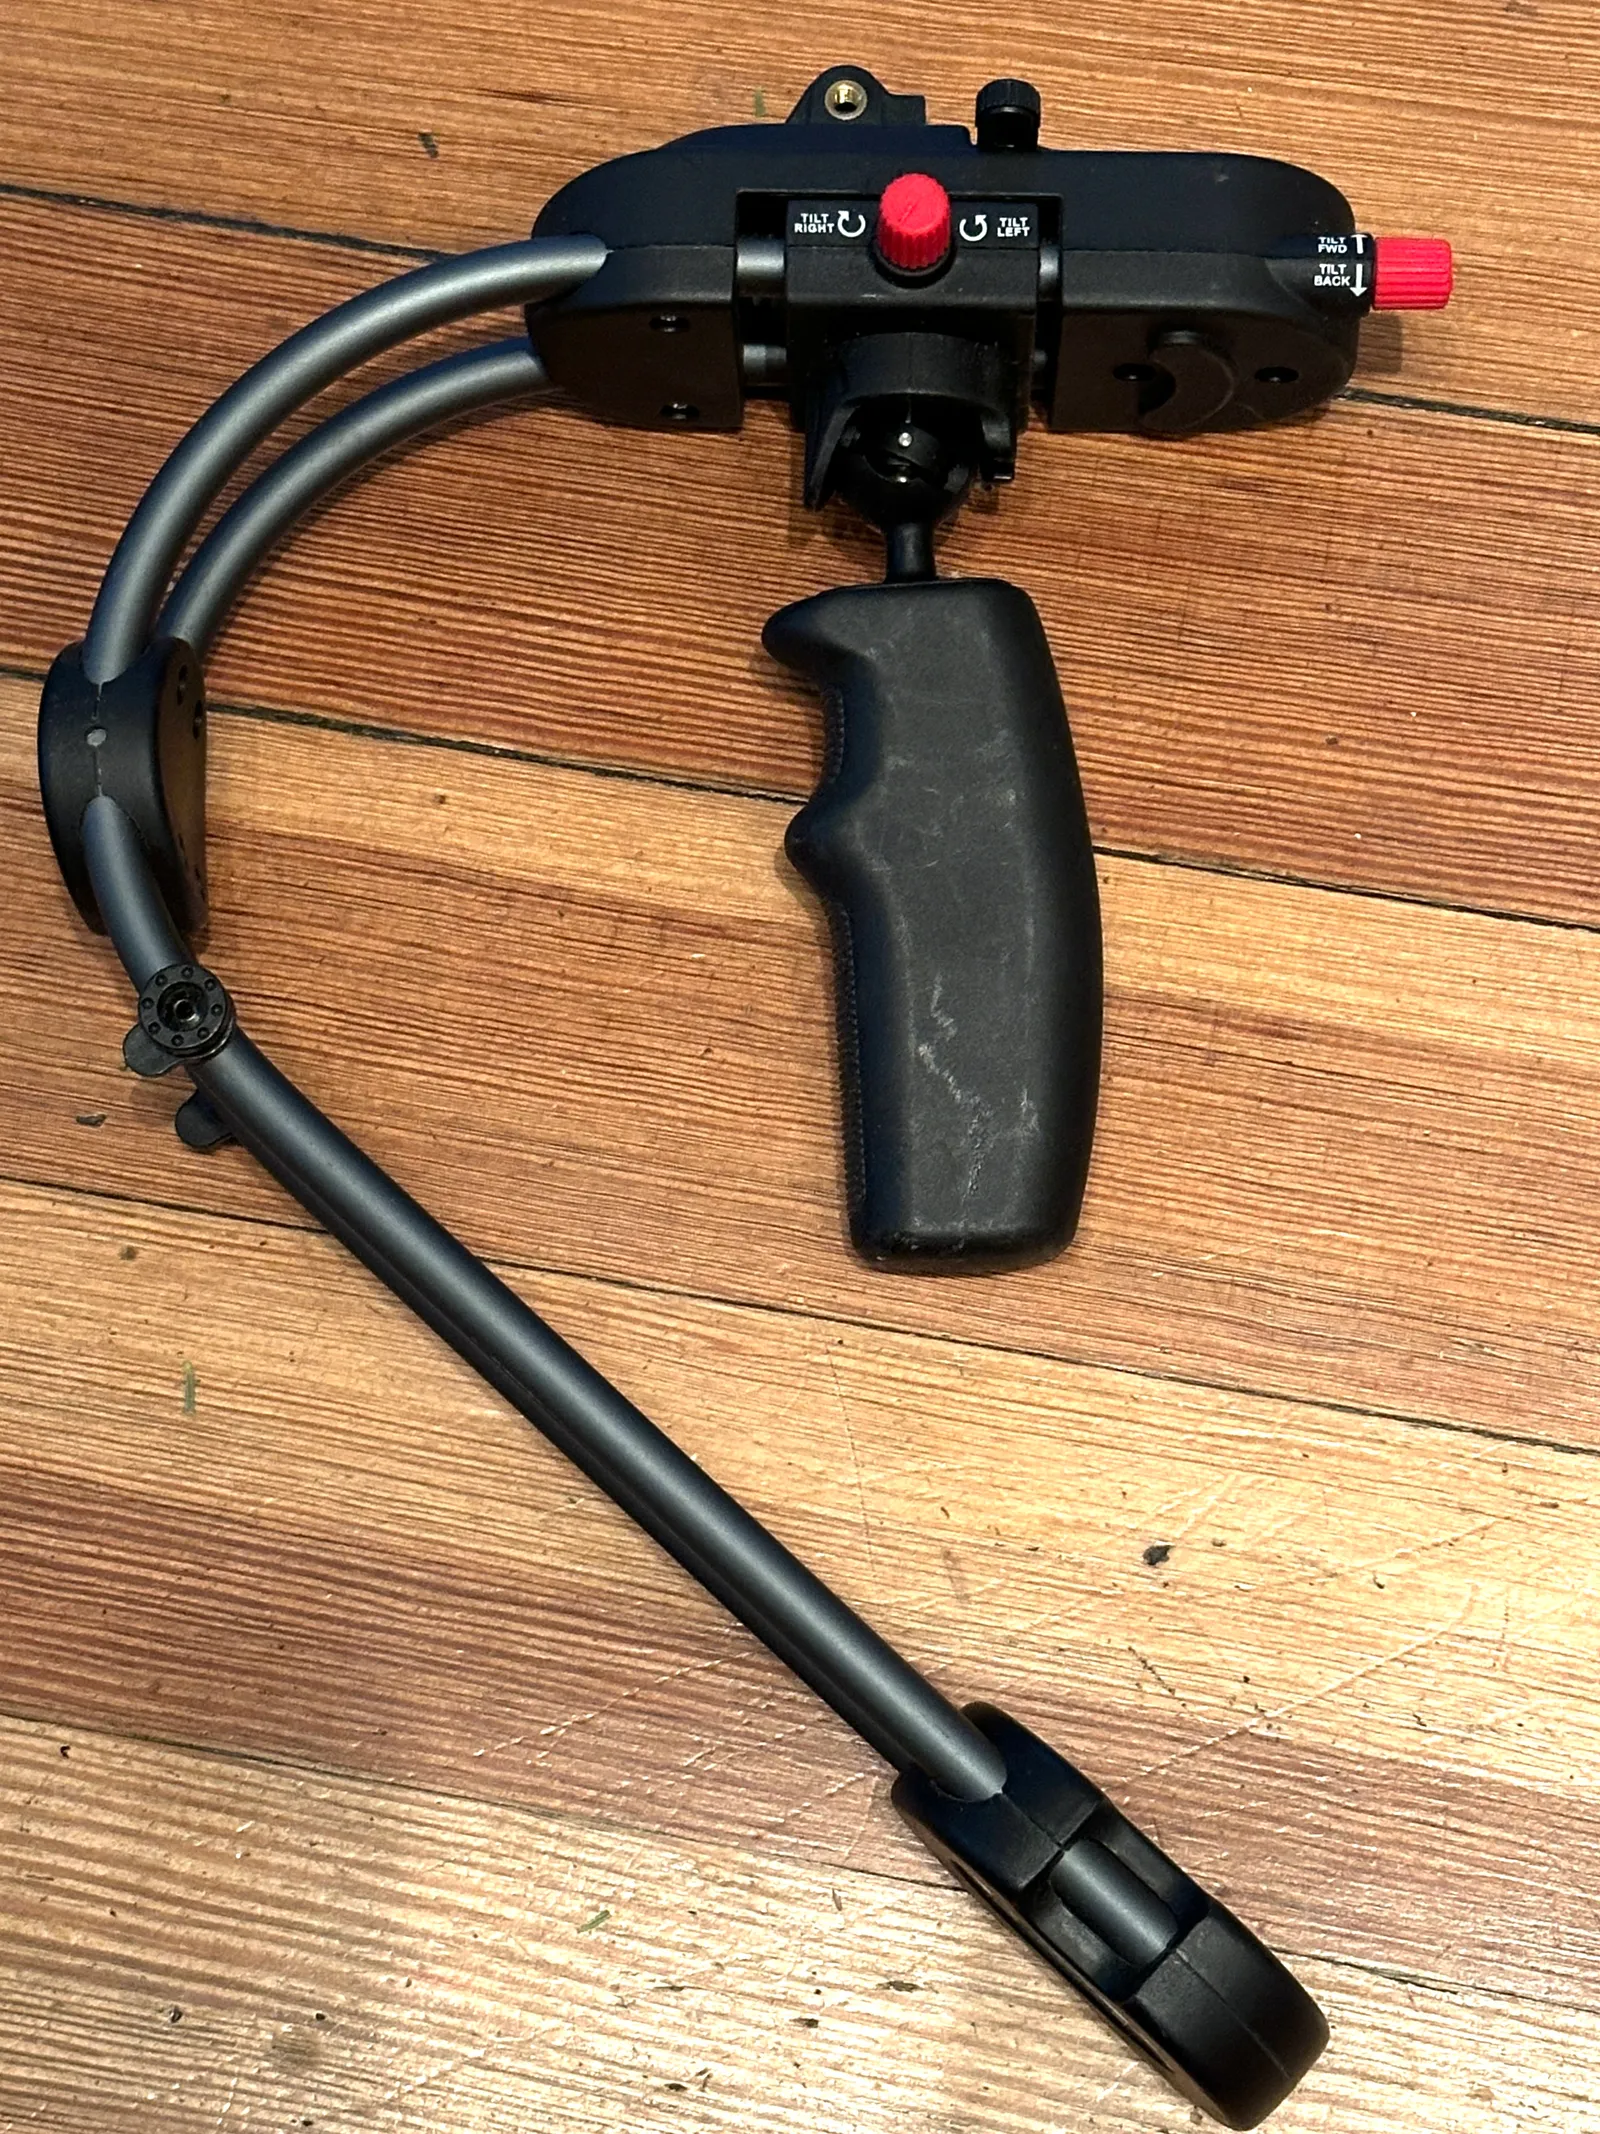 Steadicam Smoothee Stabilizer for GoPro